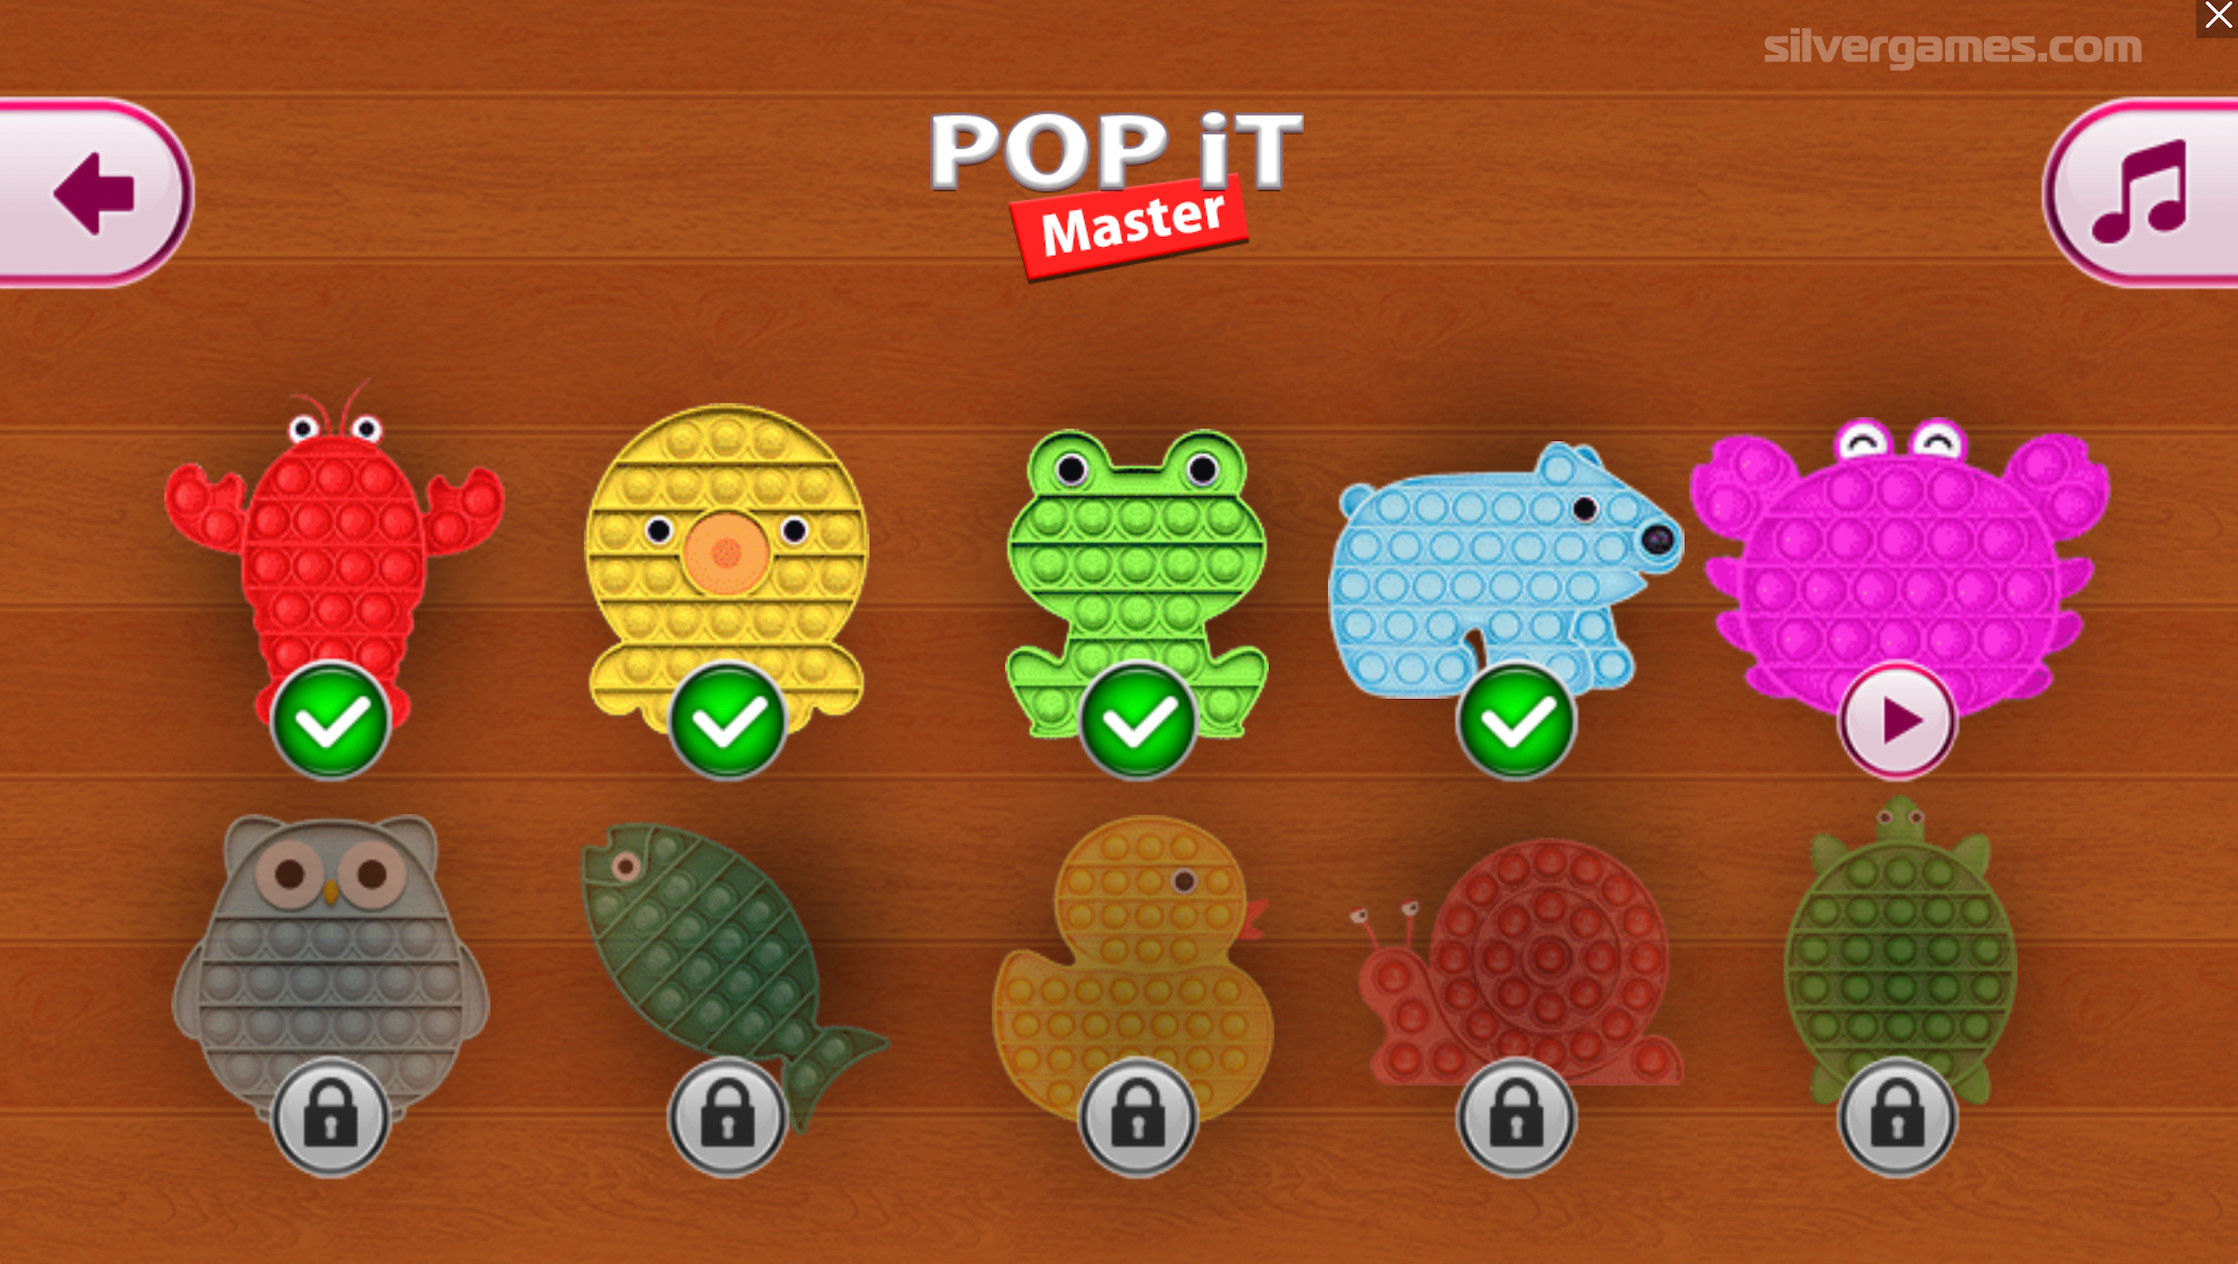 Pop It Master - Play Pop It Master Game Online